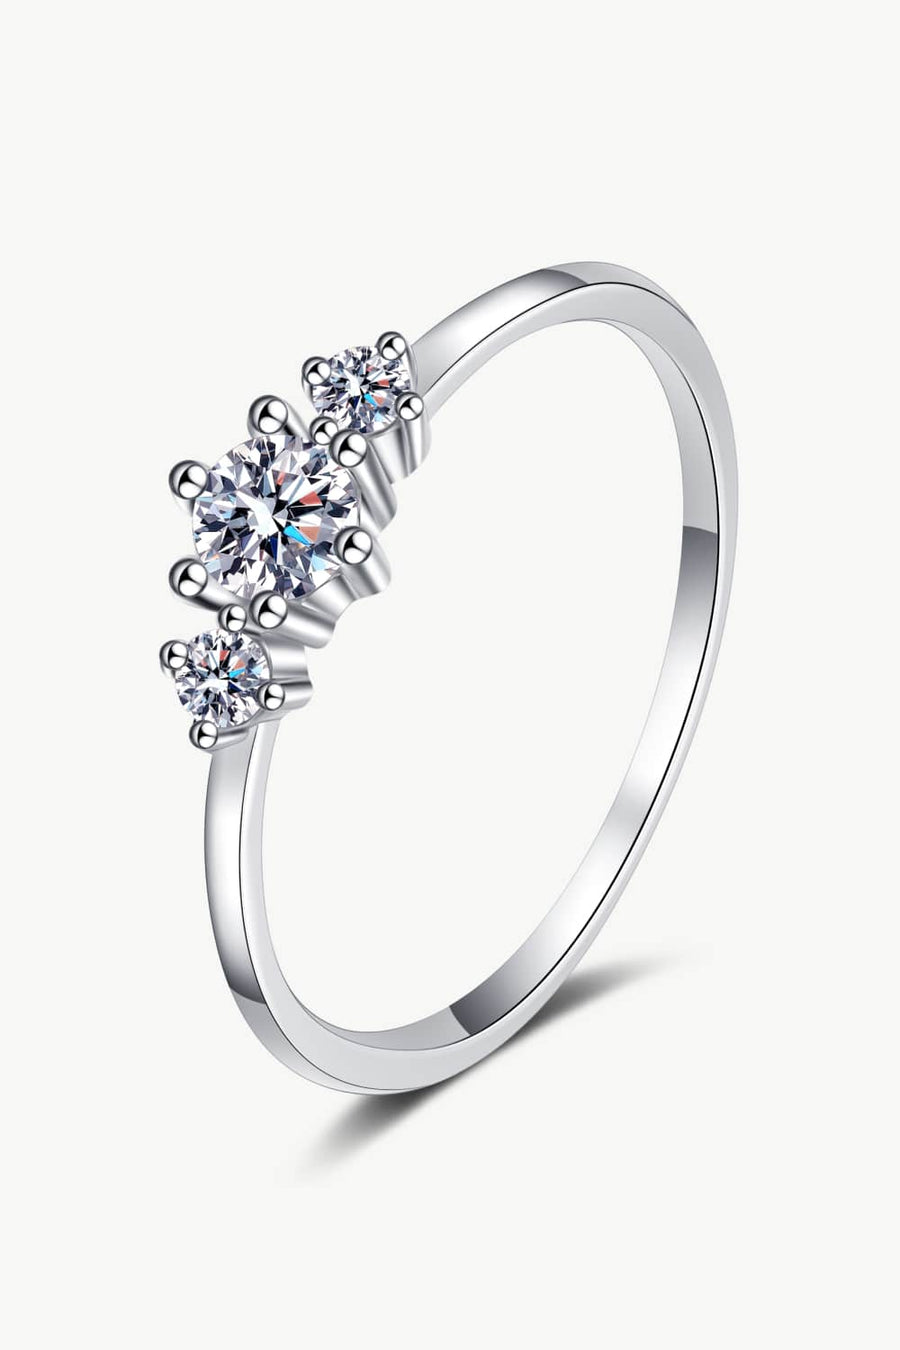 Best Diamond Ring Jewelry Gifts for Women | 0.26 Carat Diamond Ring - Dream Date Night | MASON New York